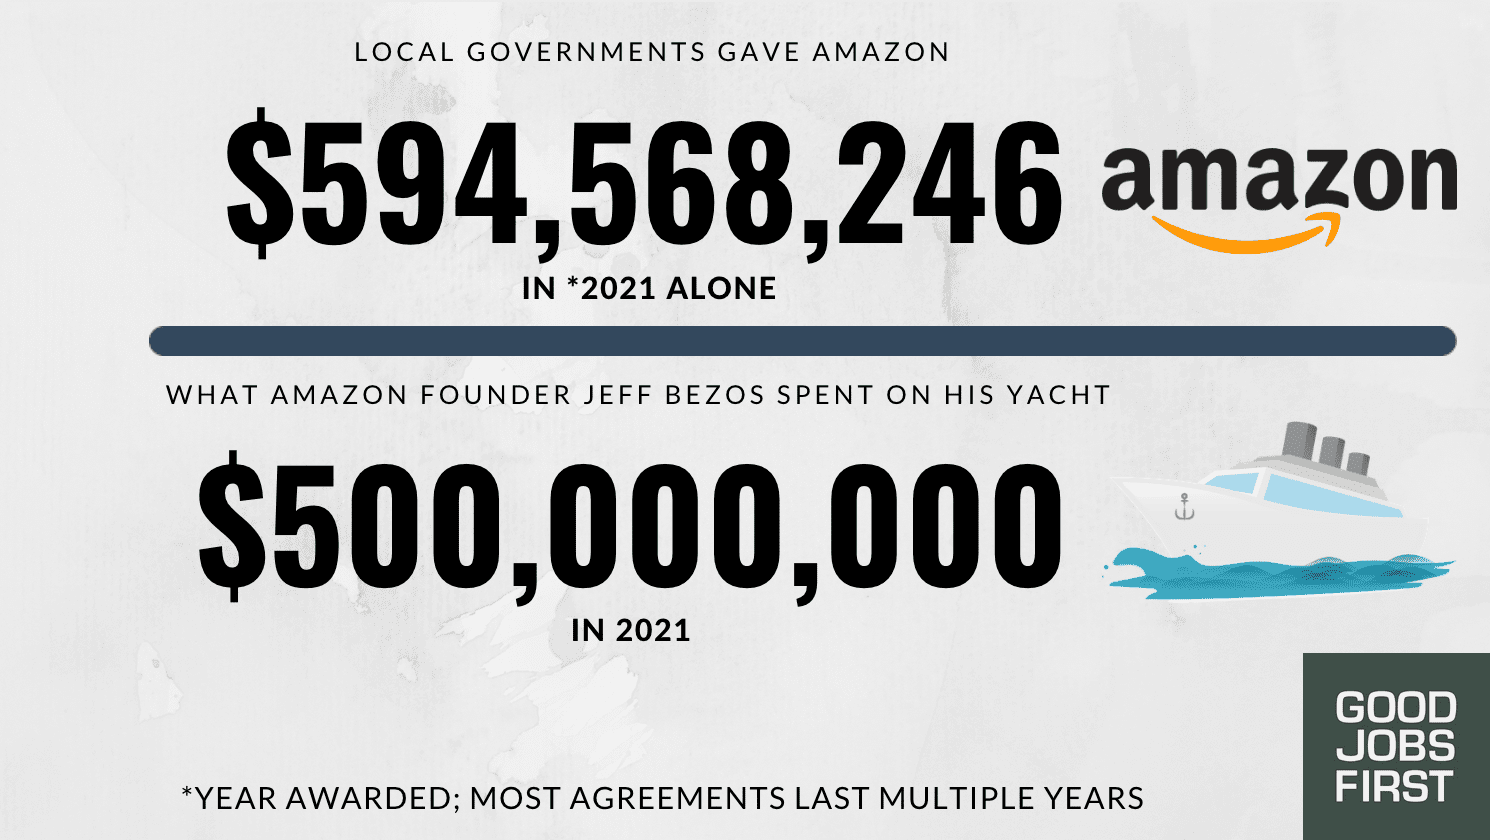 Image of the nearly $600 million Amazon has gotten in public subsidies and the $500 million Amazon founder Jeff Bezos spent on his yacht.